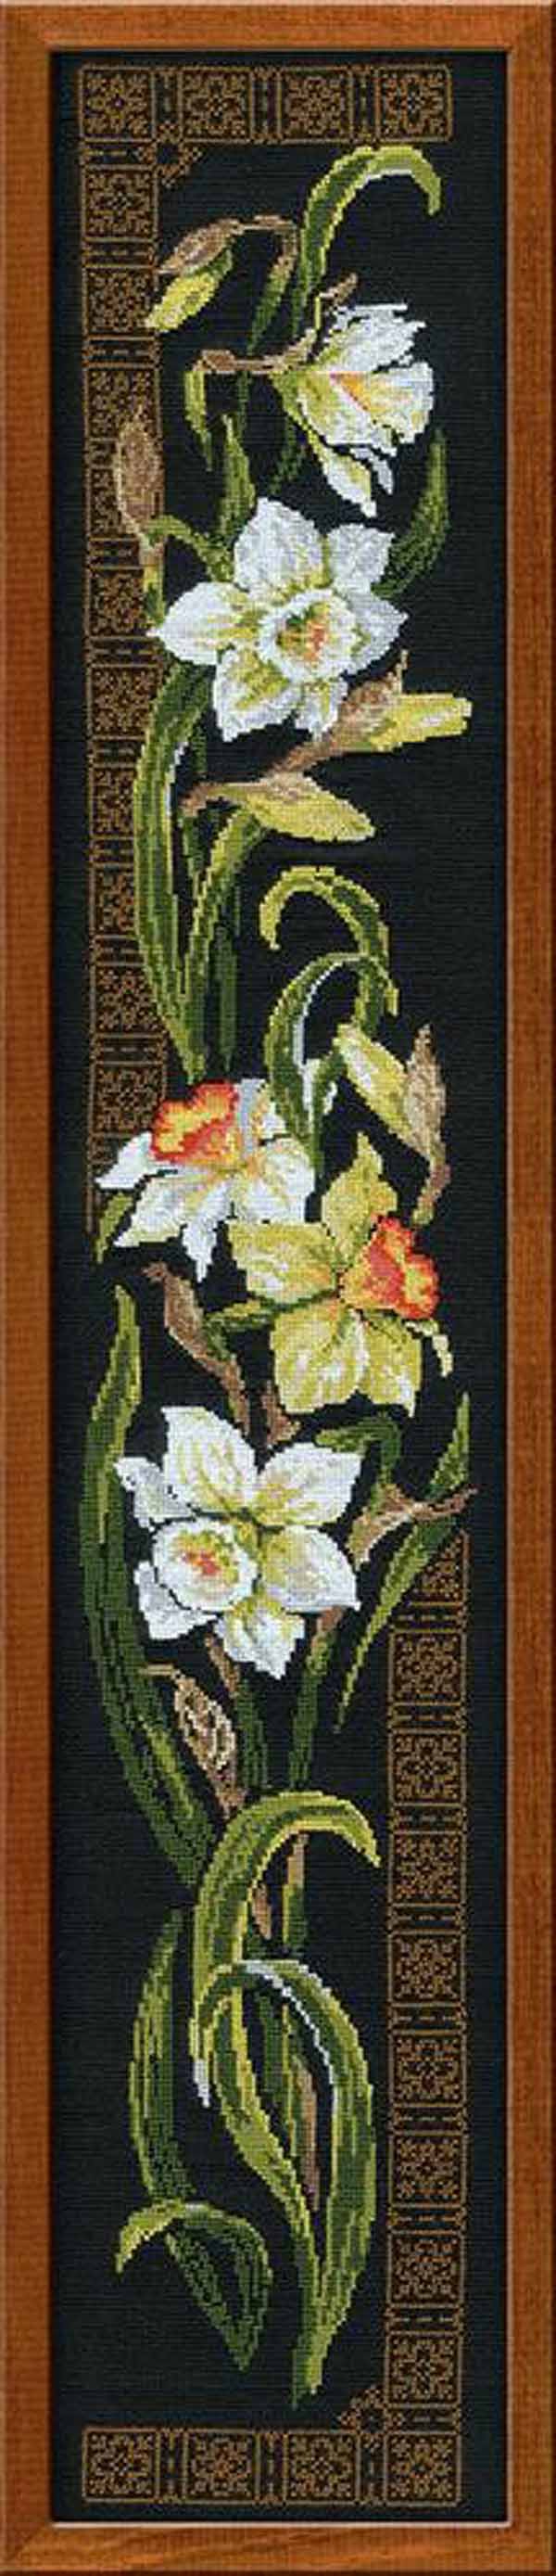 Daffodils Cross Stitch Kit By RIOLIS